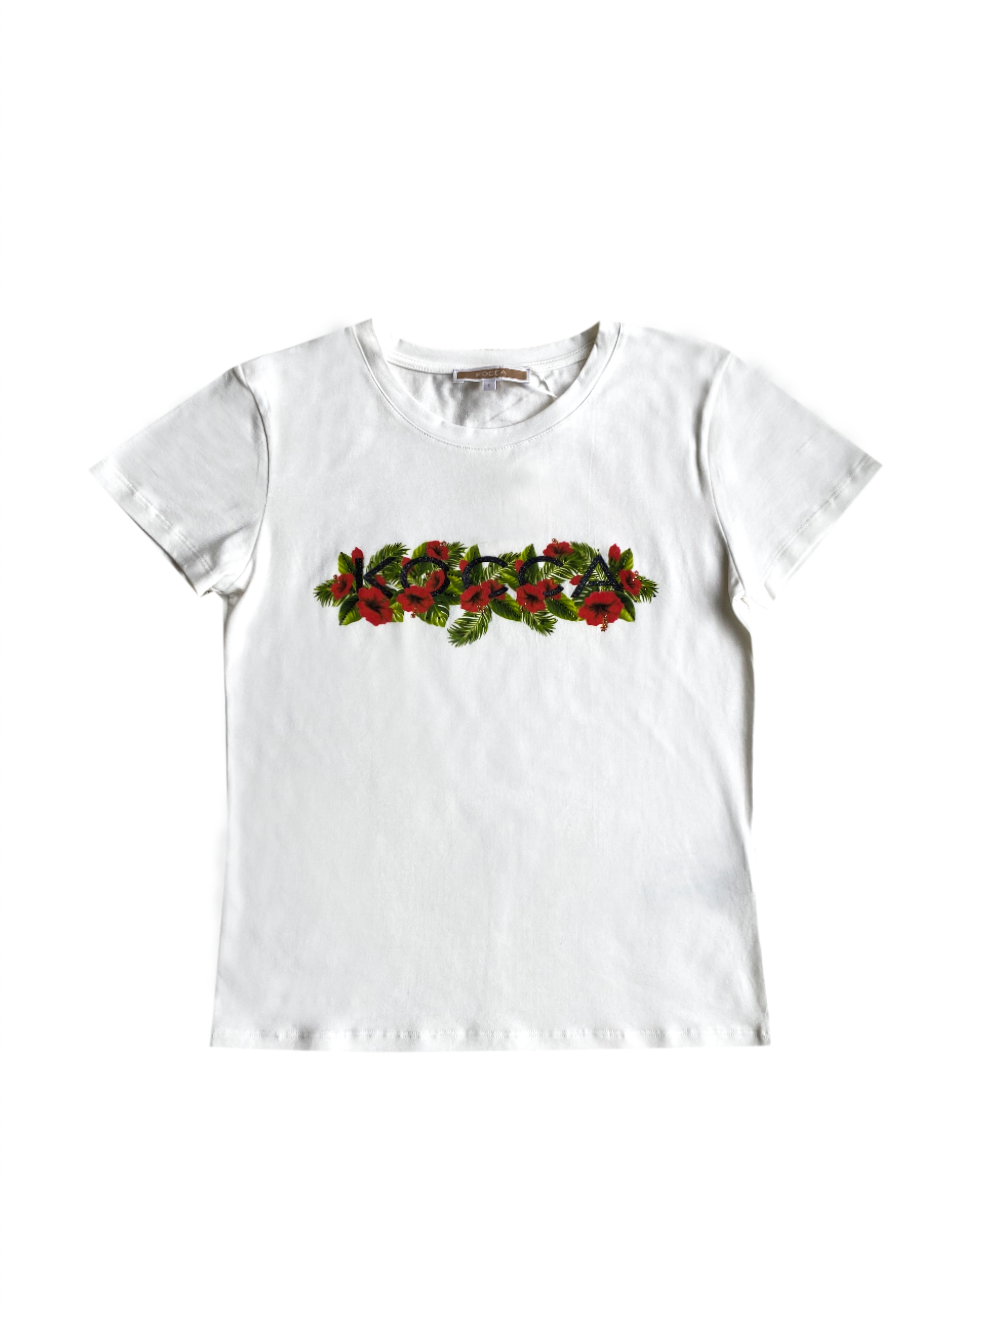 KOCCA logo white T-shirt with flowers